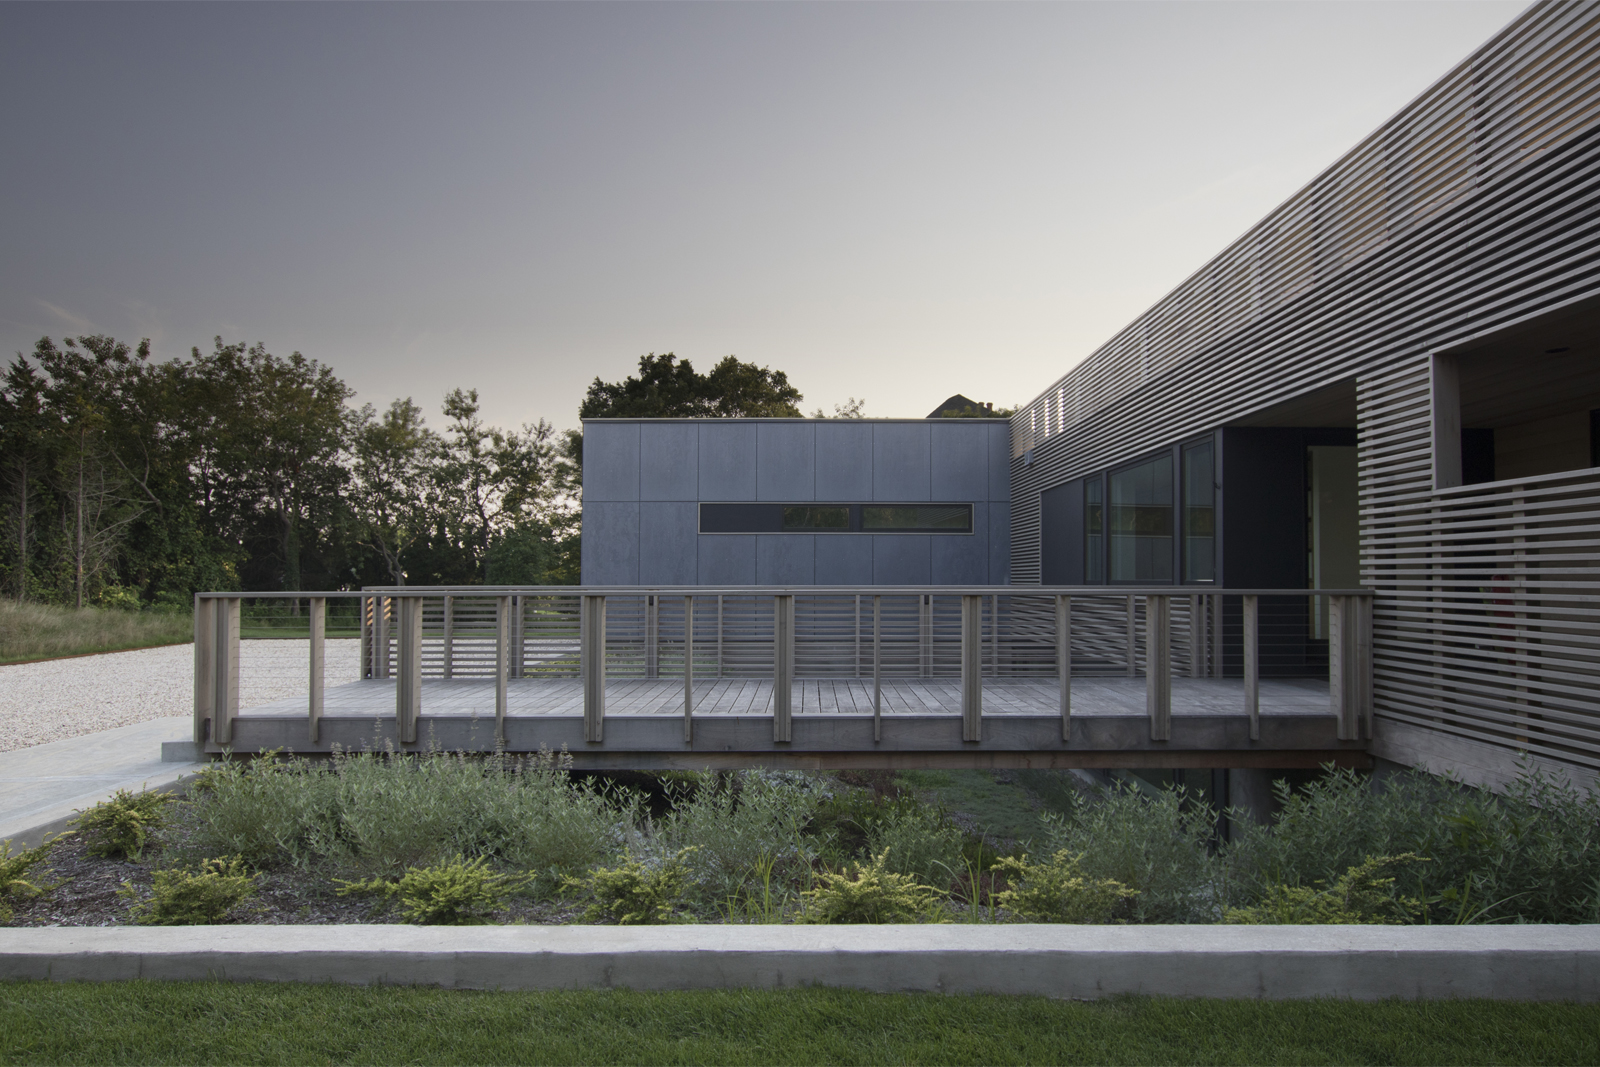 11-res4-resolution-4-architecture-modern-modular-house-prefab-home-north-fork-bluff-house-exterior-facade-elevation-bridge-entry-dusk.jpg